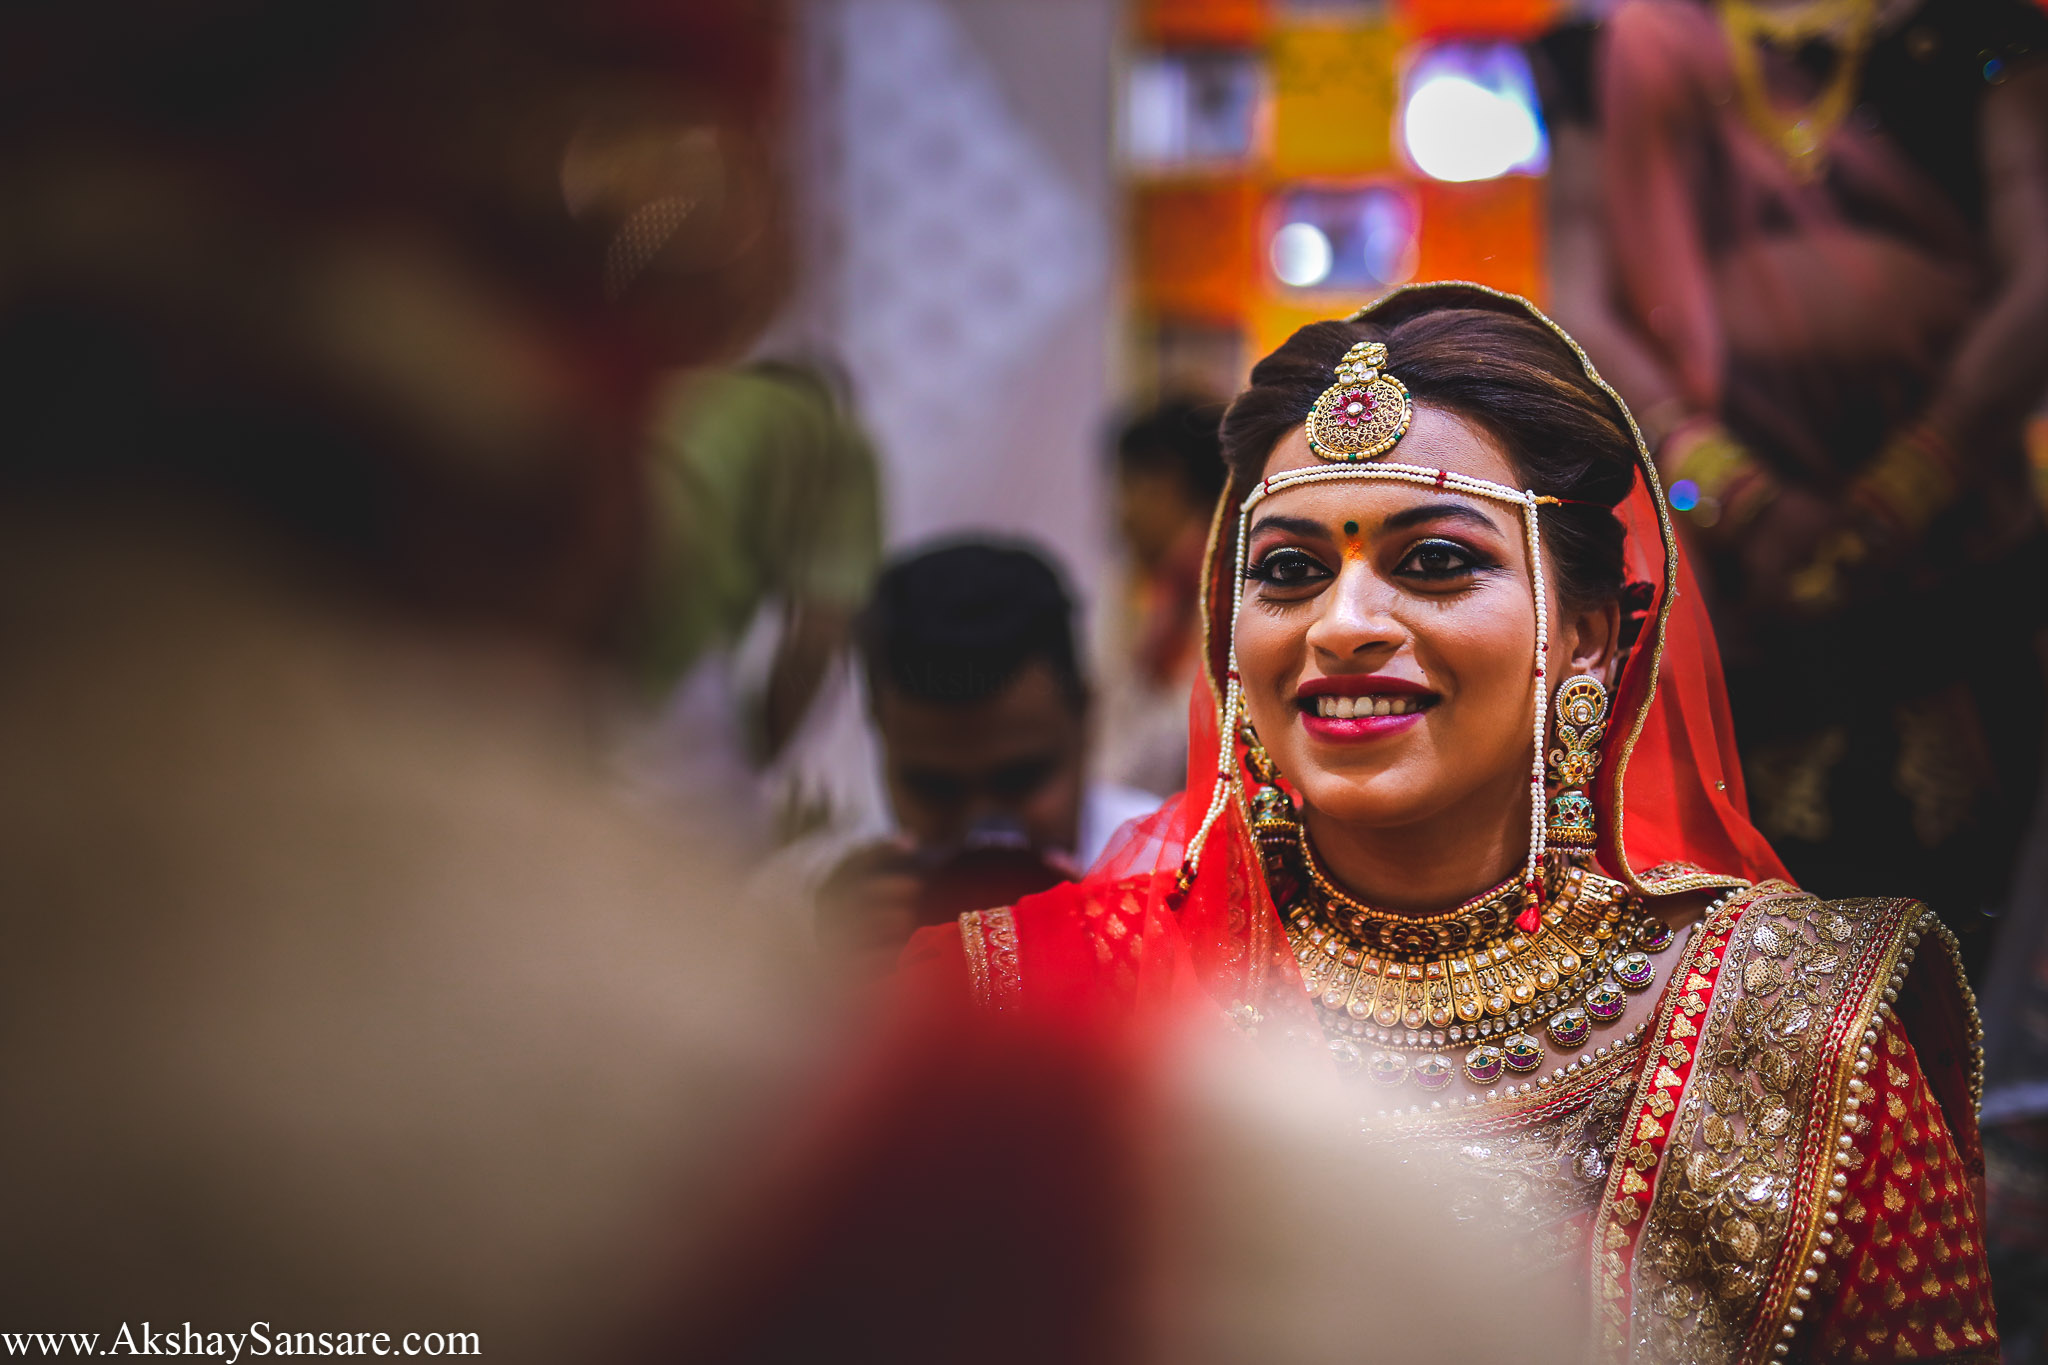 Ajay & Devika Akshay Sansare Photography Best Candid wedding photographer in mumbai india10.jpg